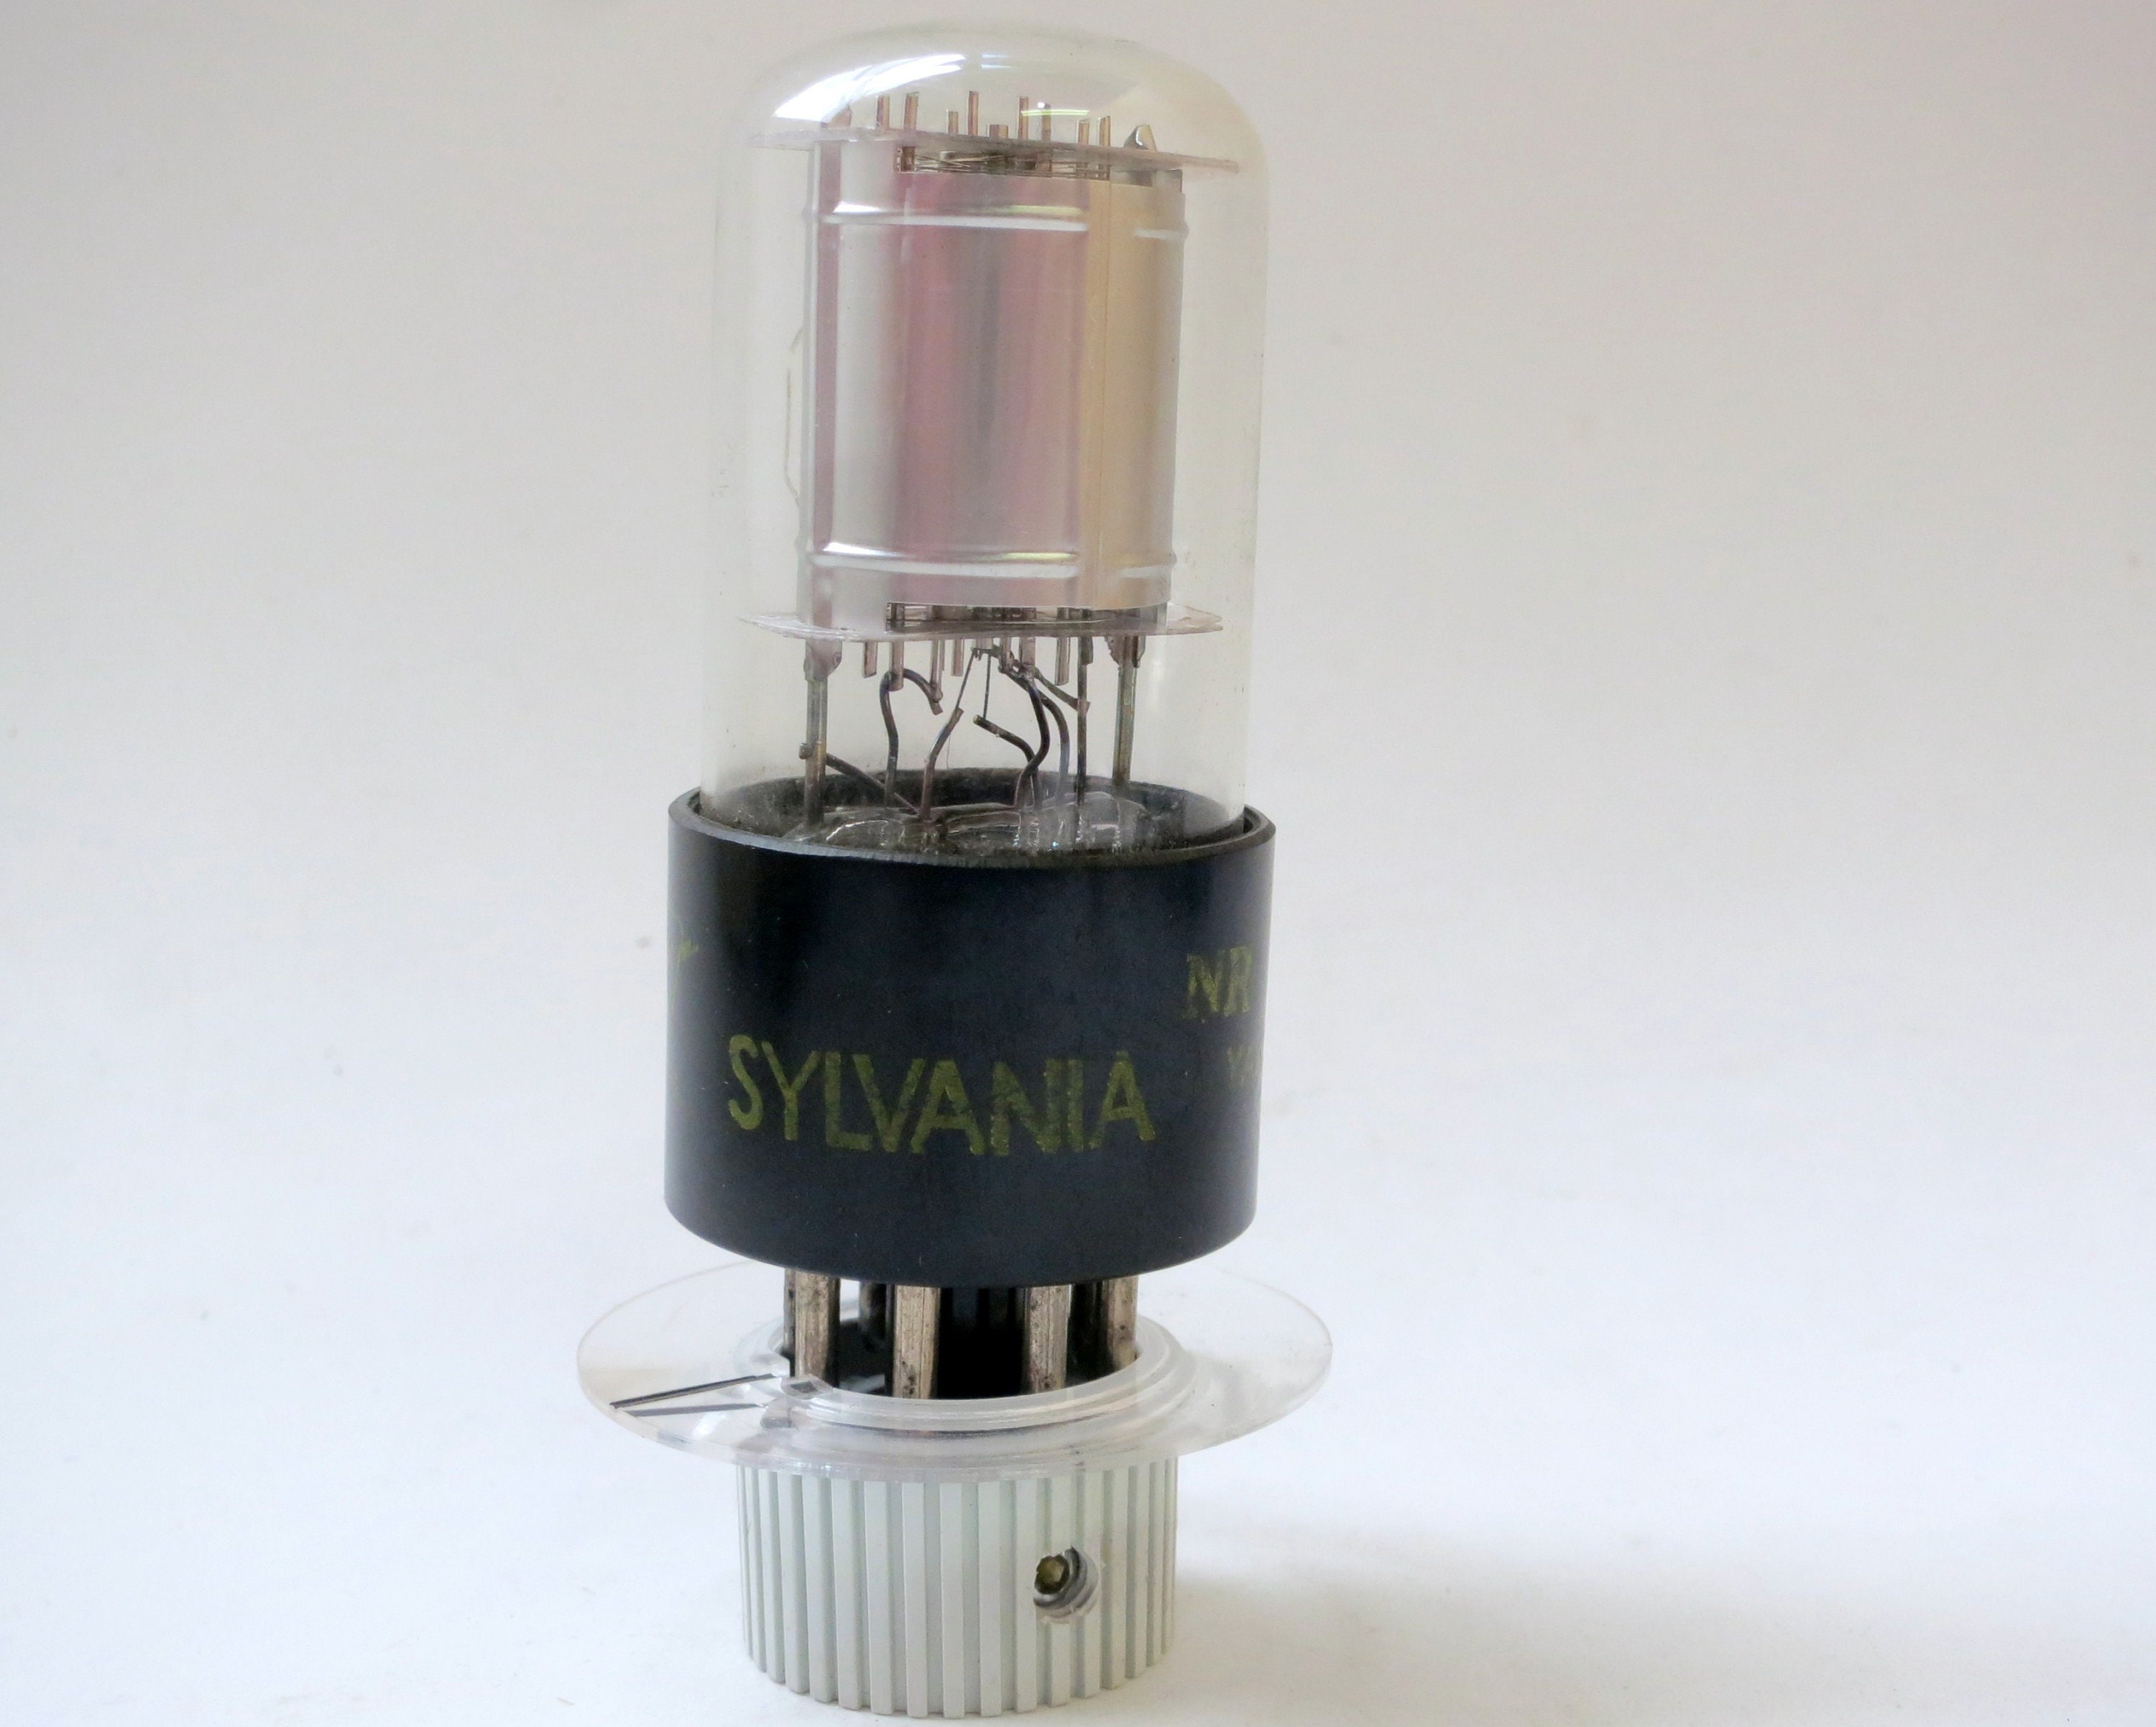 12SA7 GE Metal Vintage Radio Amplifier Vacuum Tubes 2 Valves Tested 12sa7gt for sale online 